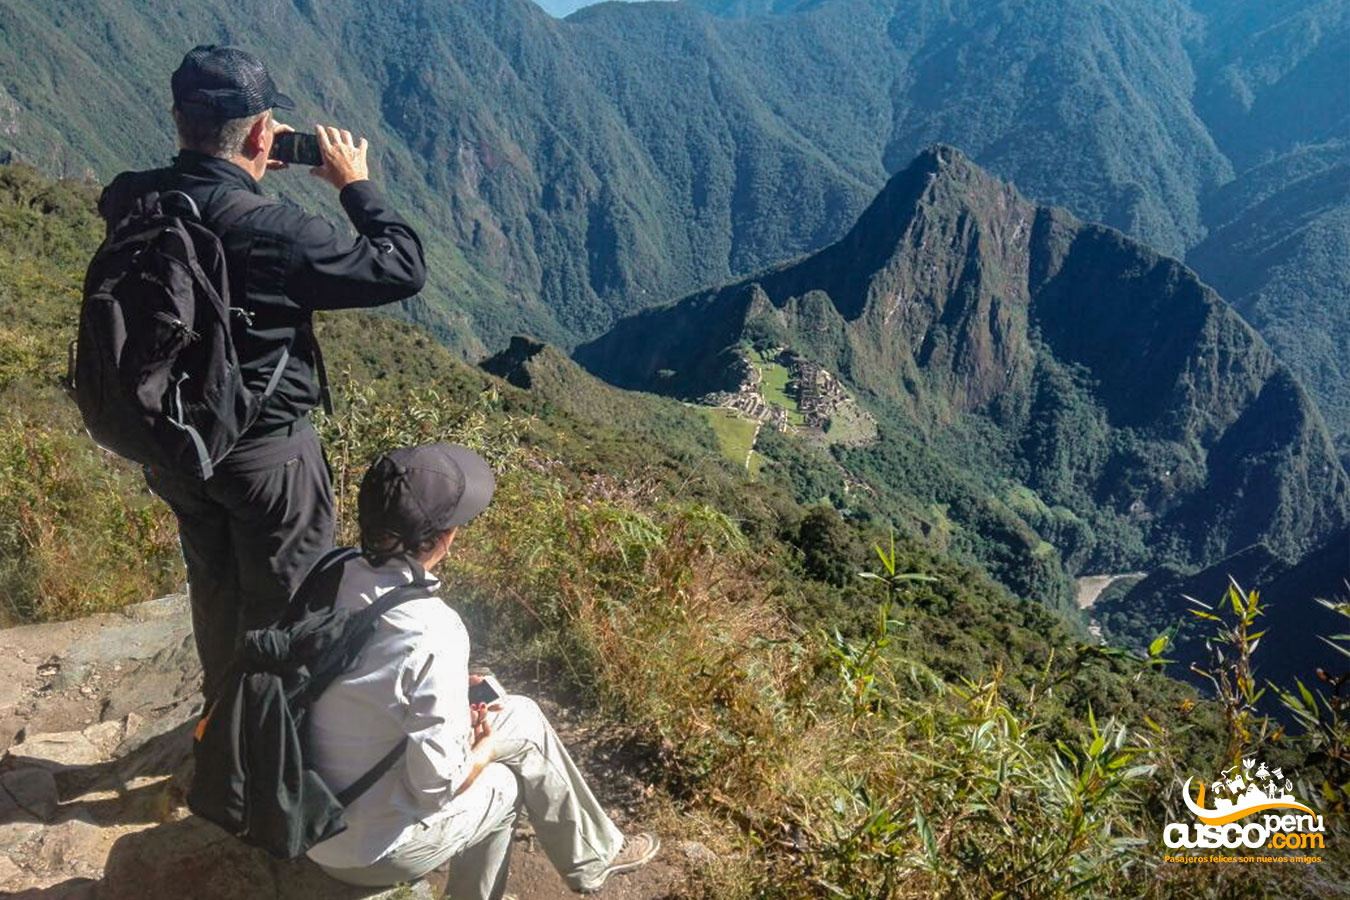 Vista desde la cima de la montaña Machu Picchu. Fuente: CuscoPeru.com